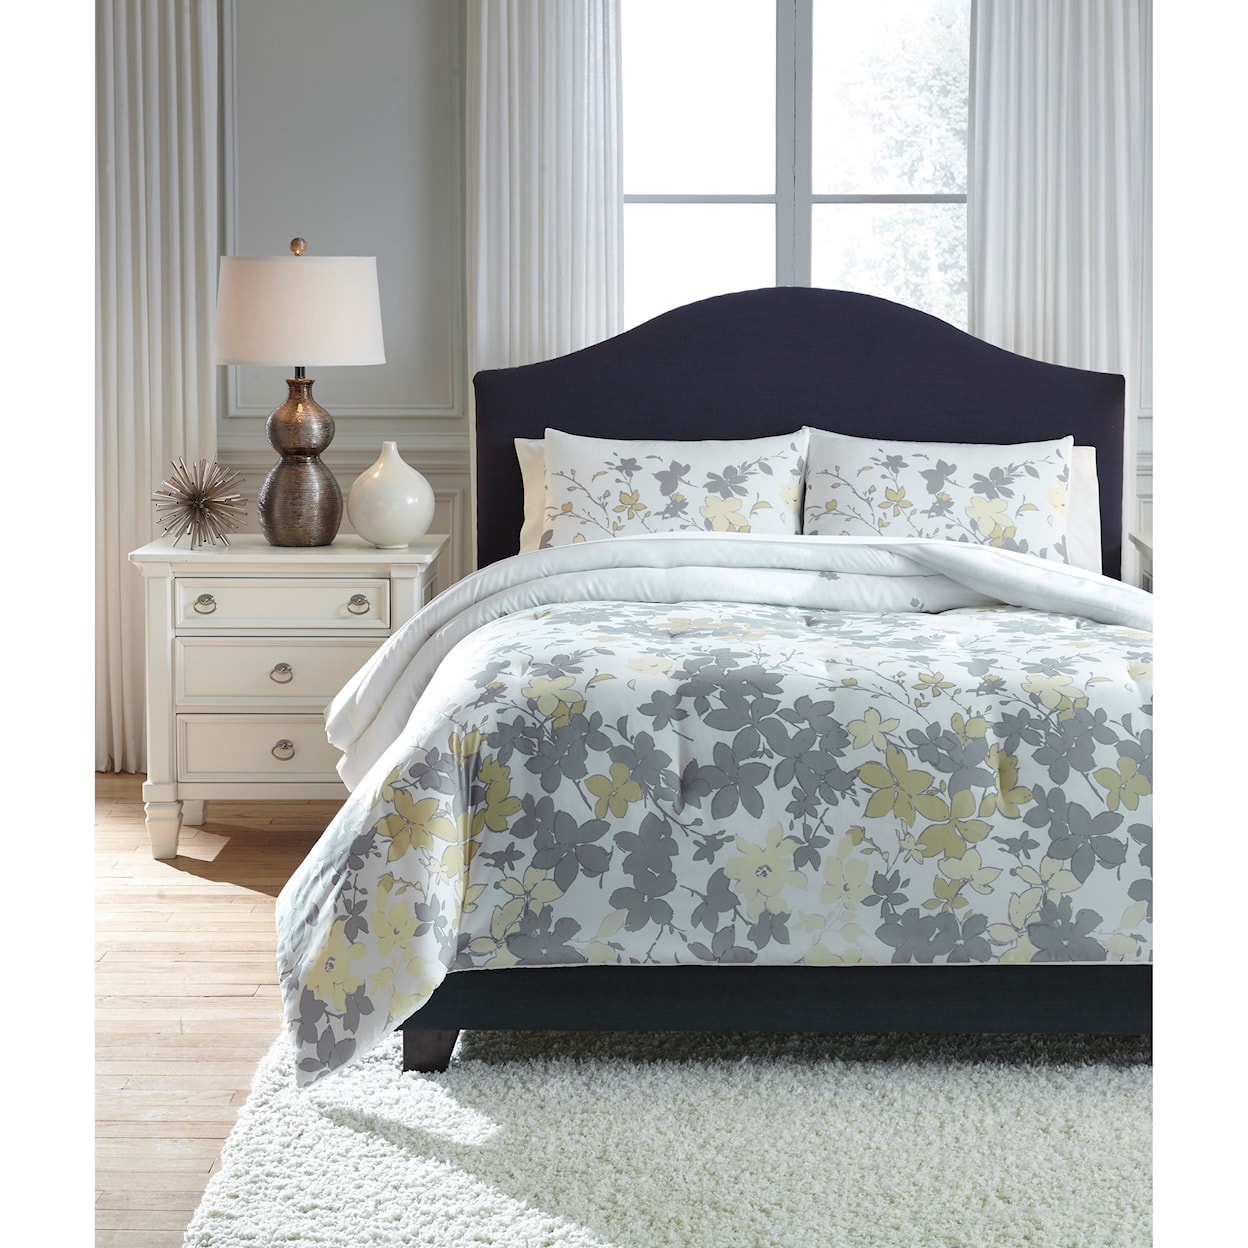 Ashley Furniture Signature Design Bedding Sets King Maureen Gray/Yellow Comforter Set